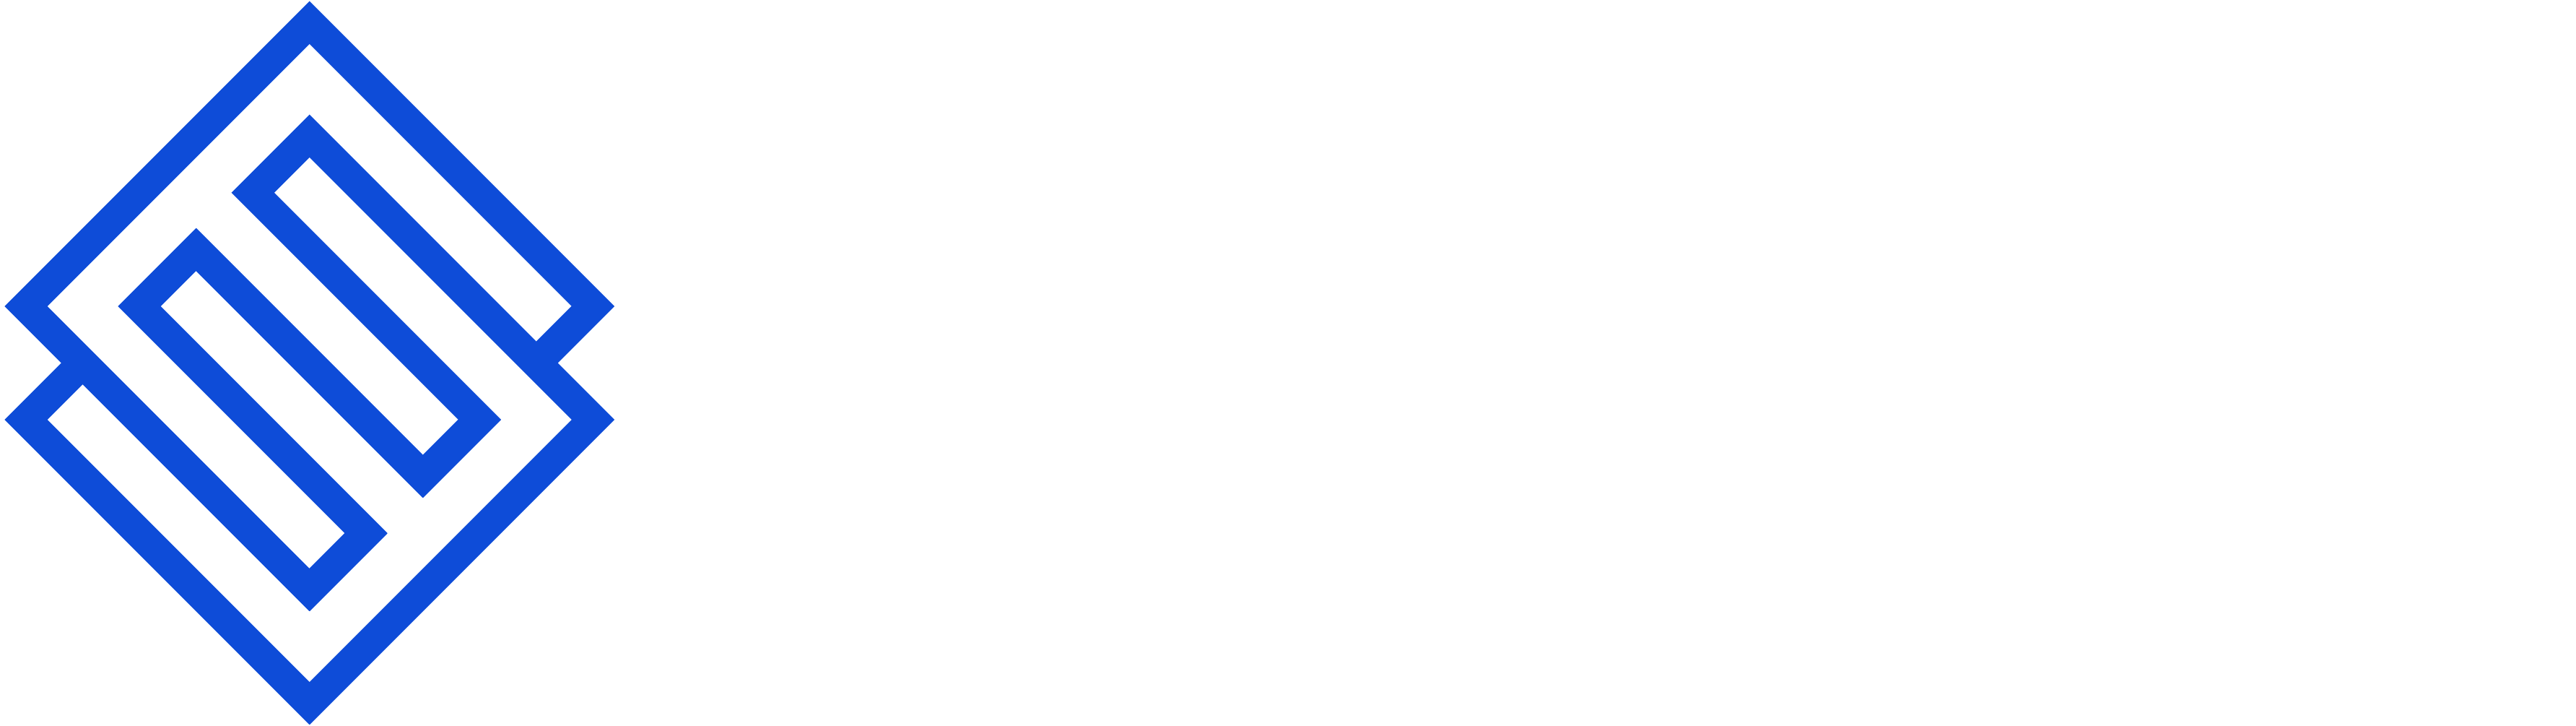 ebank logo